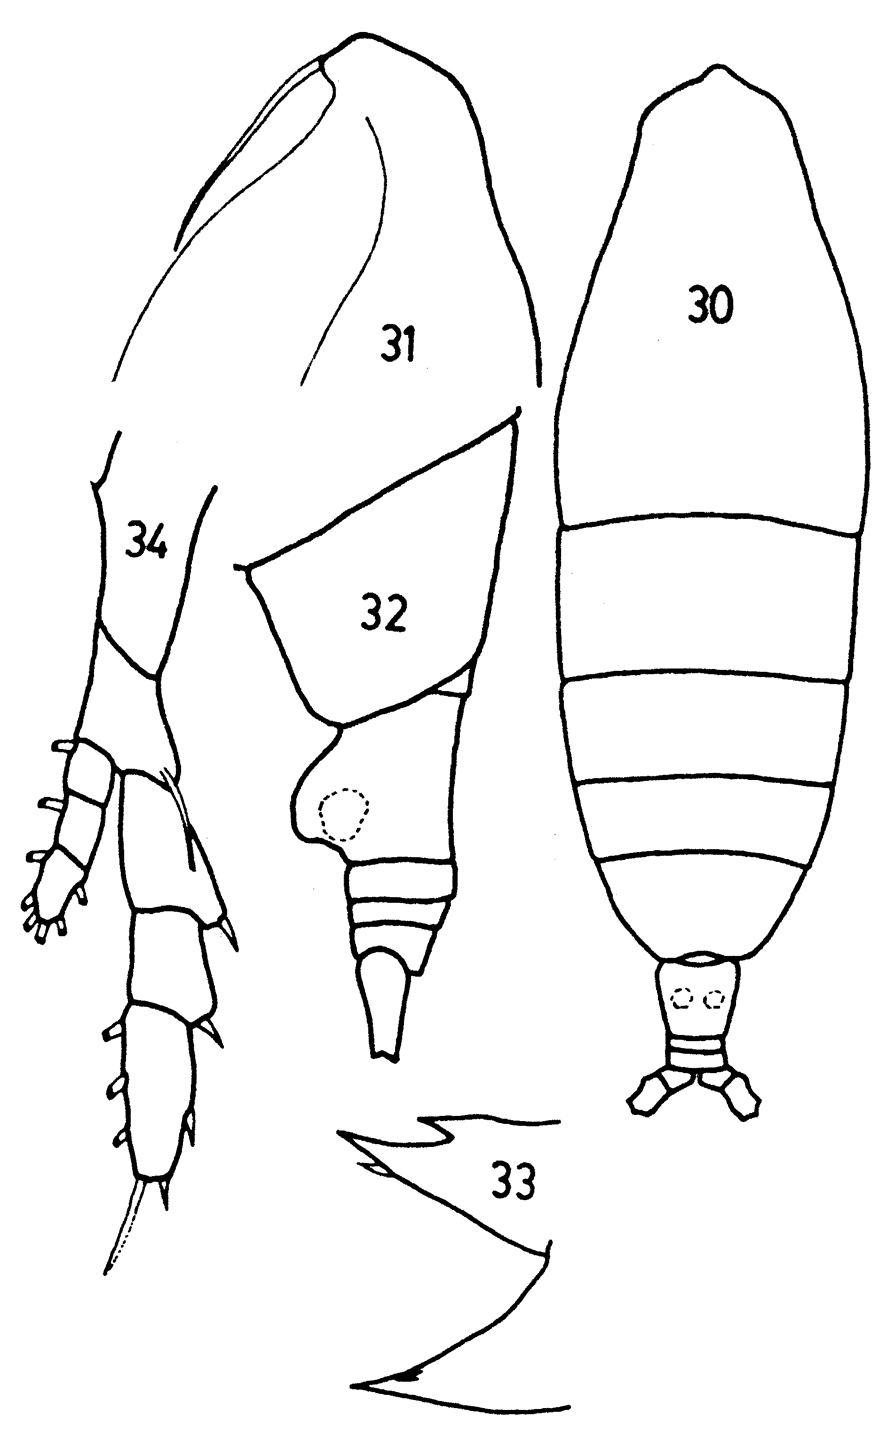 Species Haloptilus longicornis - Plate 12 of morphological figures